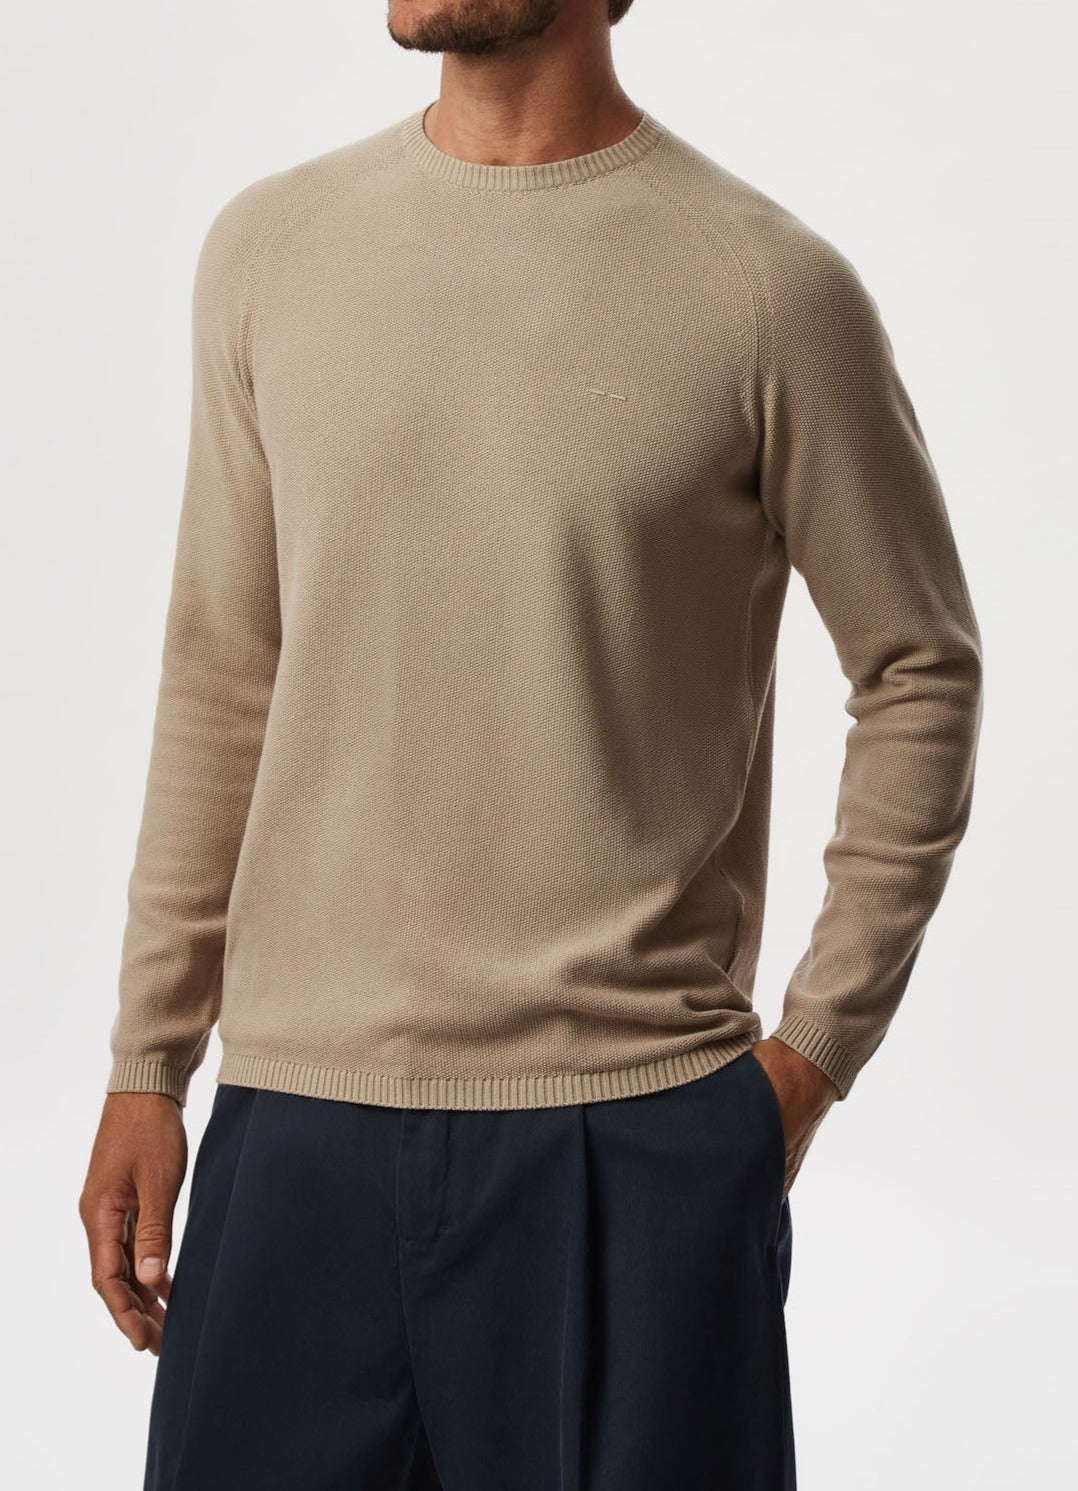 Sand Cotton Sweater With Striped Texture | Adolfo Dominguez – Adolfo ...